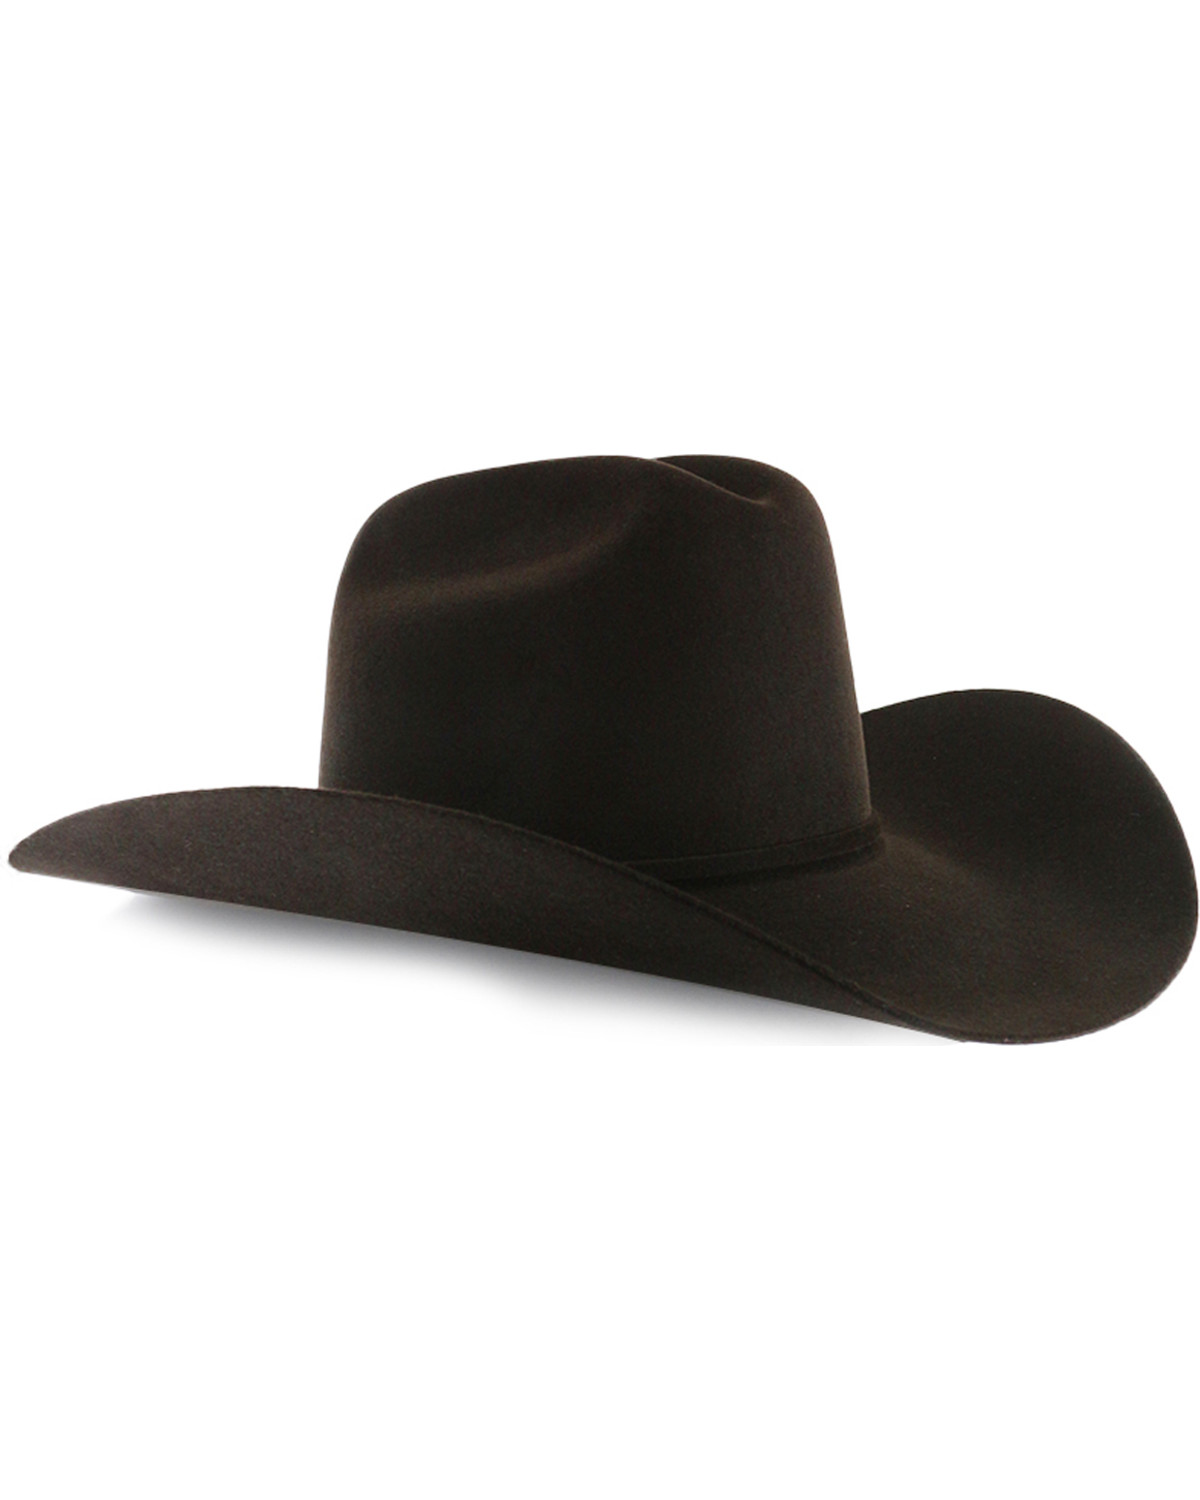 Rodeo King 5X Felt Cowboy Hat